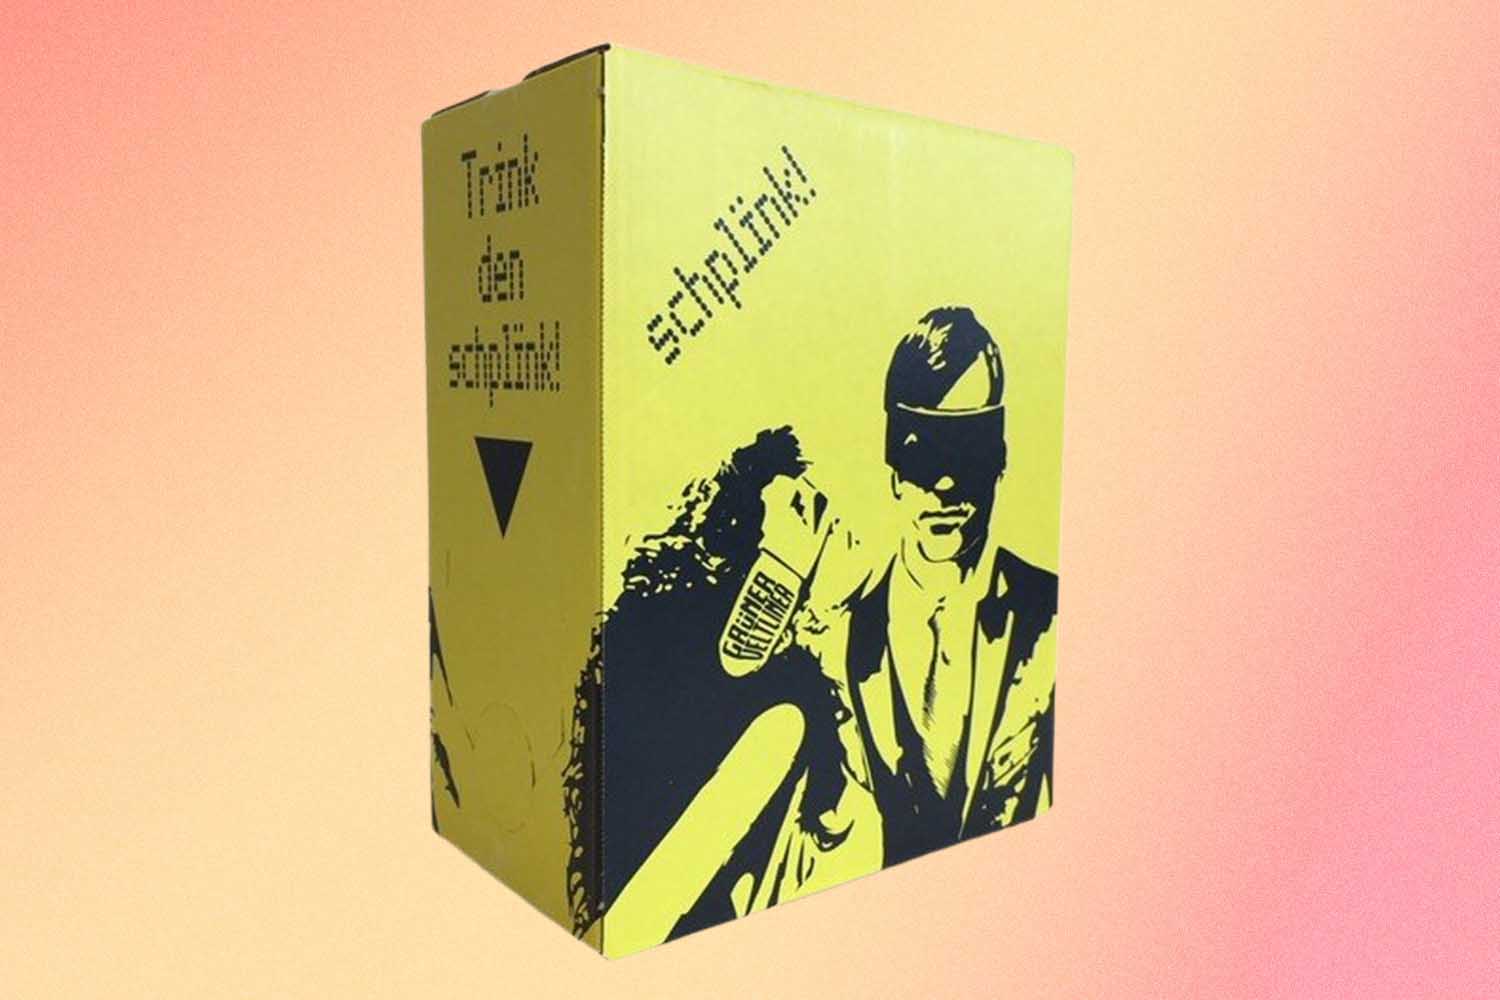 Schplink, a popular boxed wine